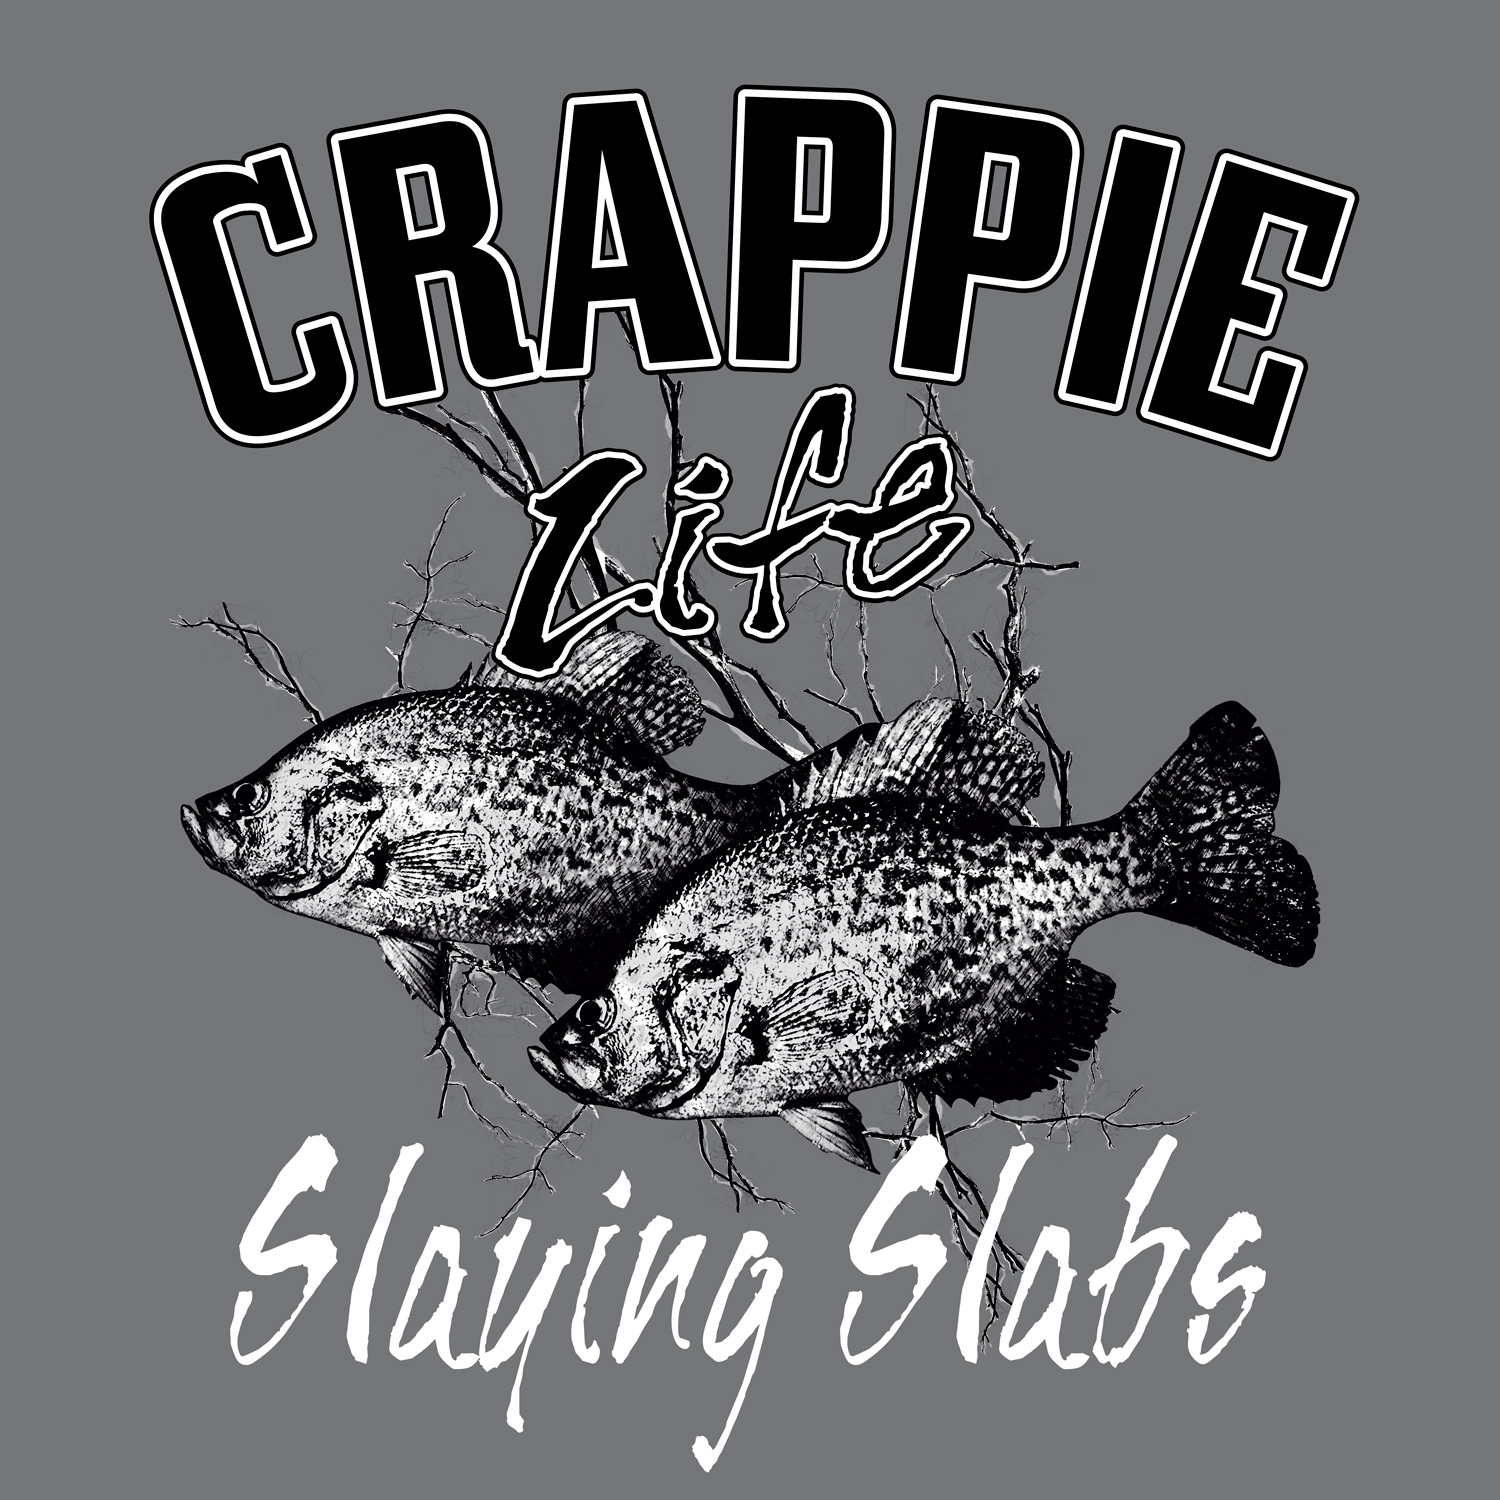 Crappie Fishing Shirts, Ladies Long Sleeve Fish T-Shirt